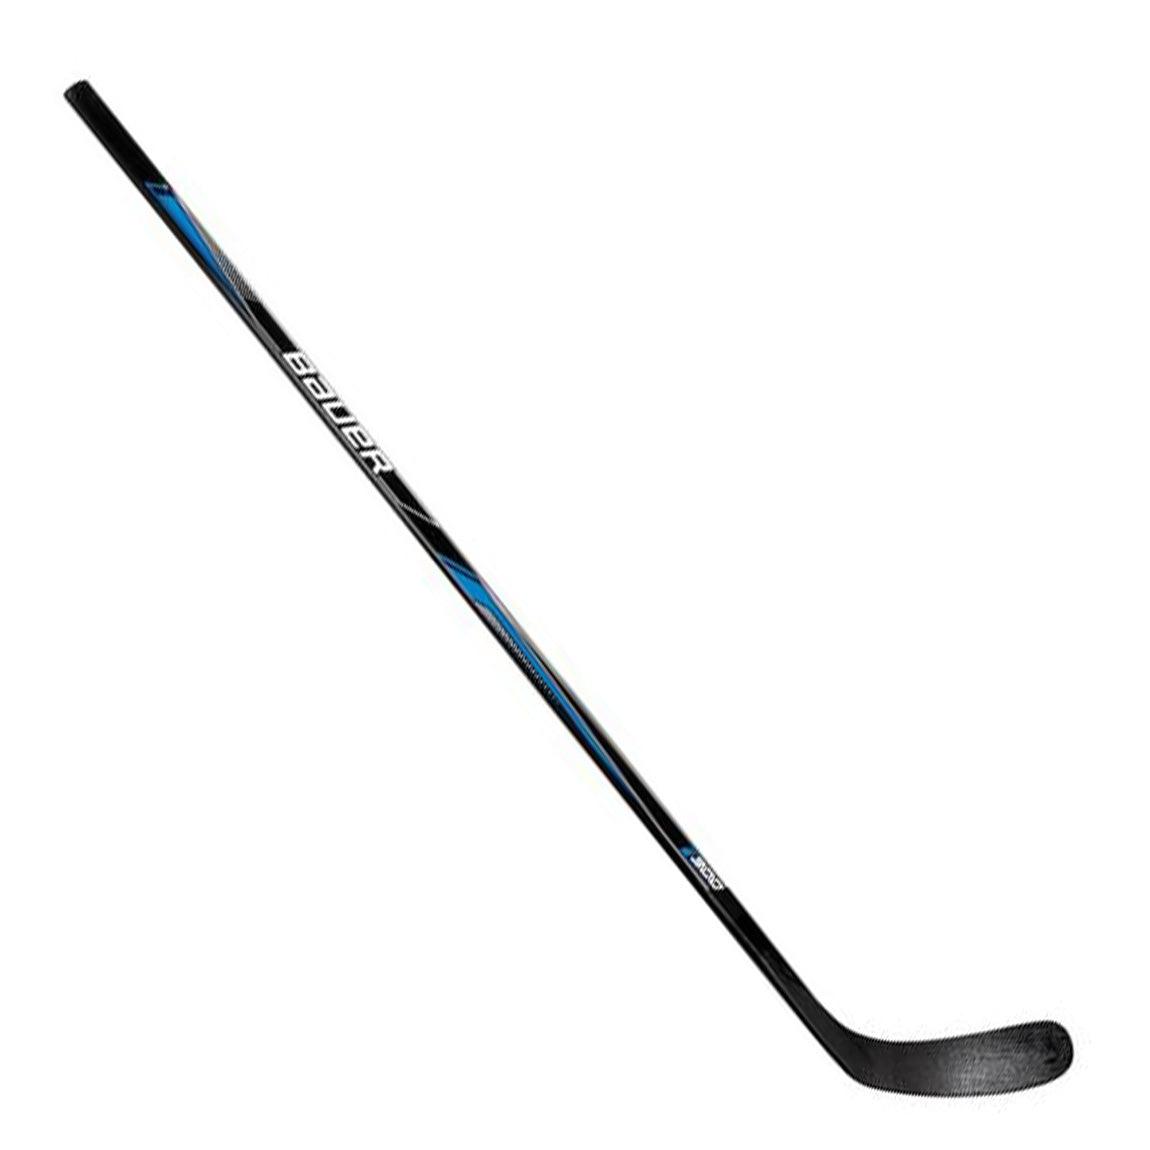 52” i300 Stick ABS Blade Hockey Stick - Junior - Sports Excellence